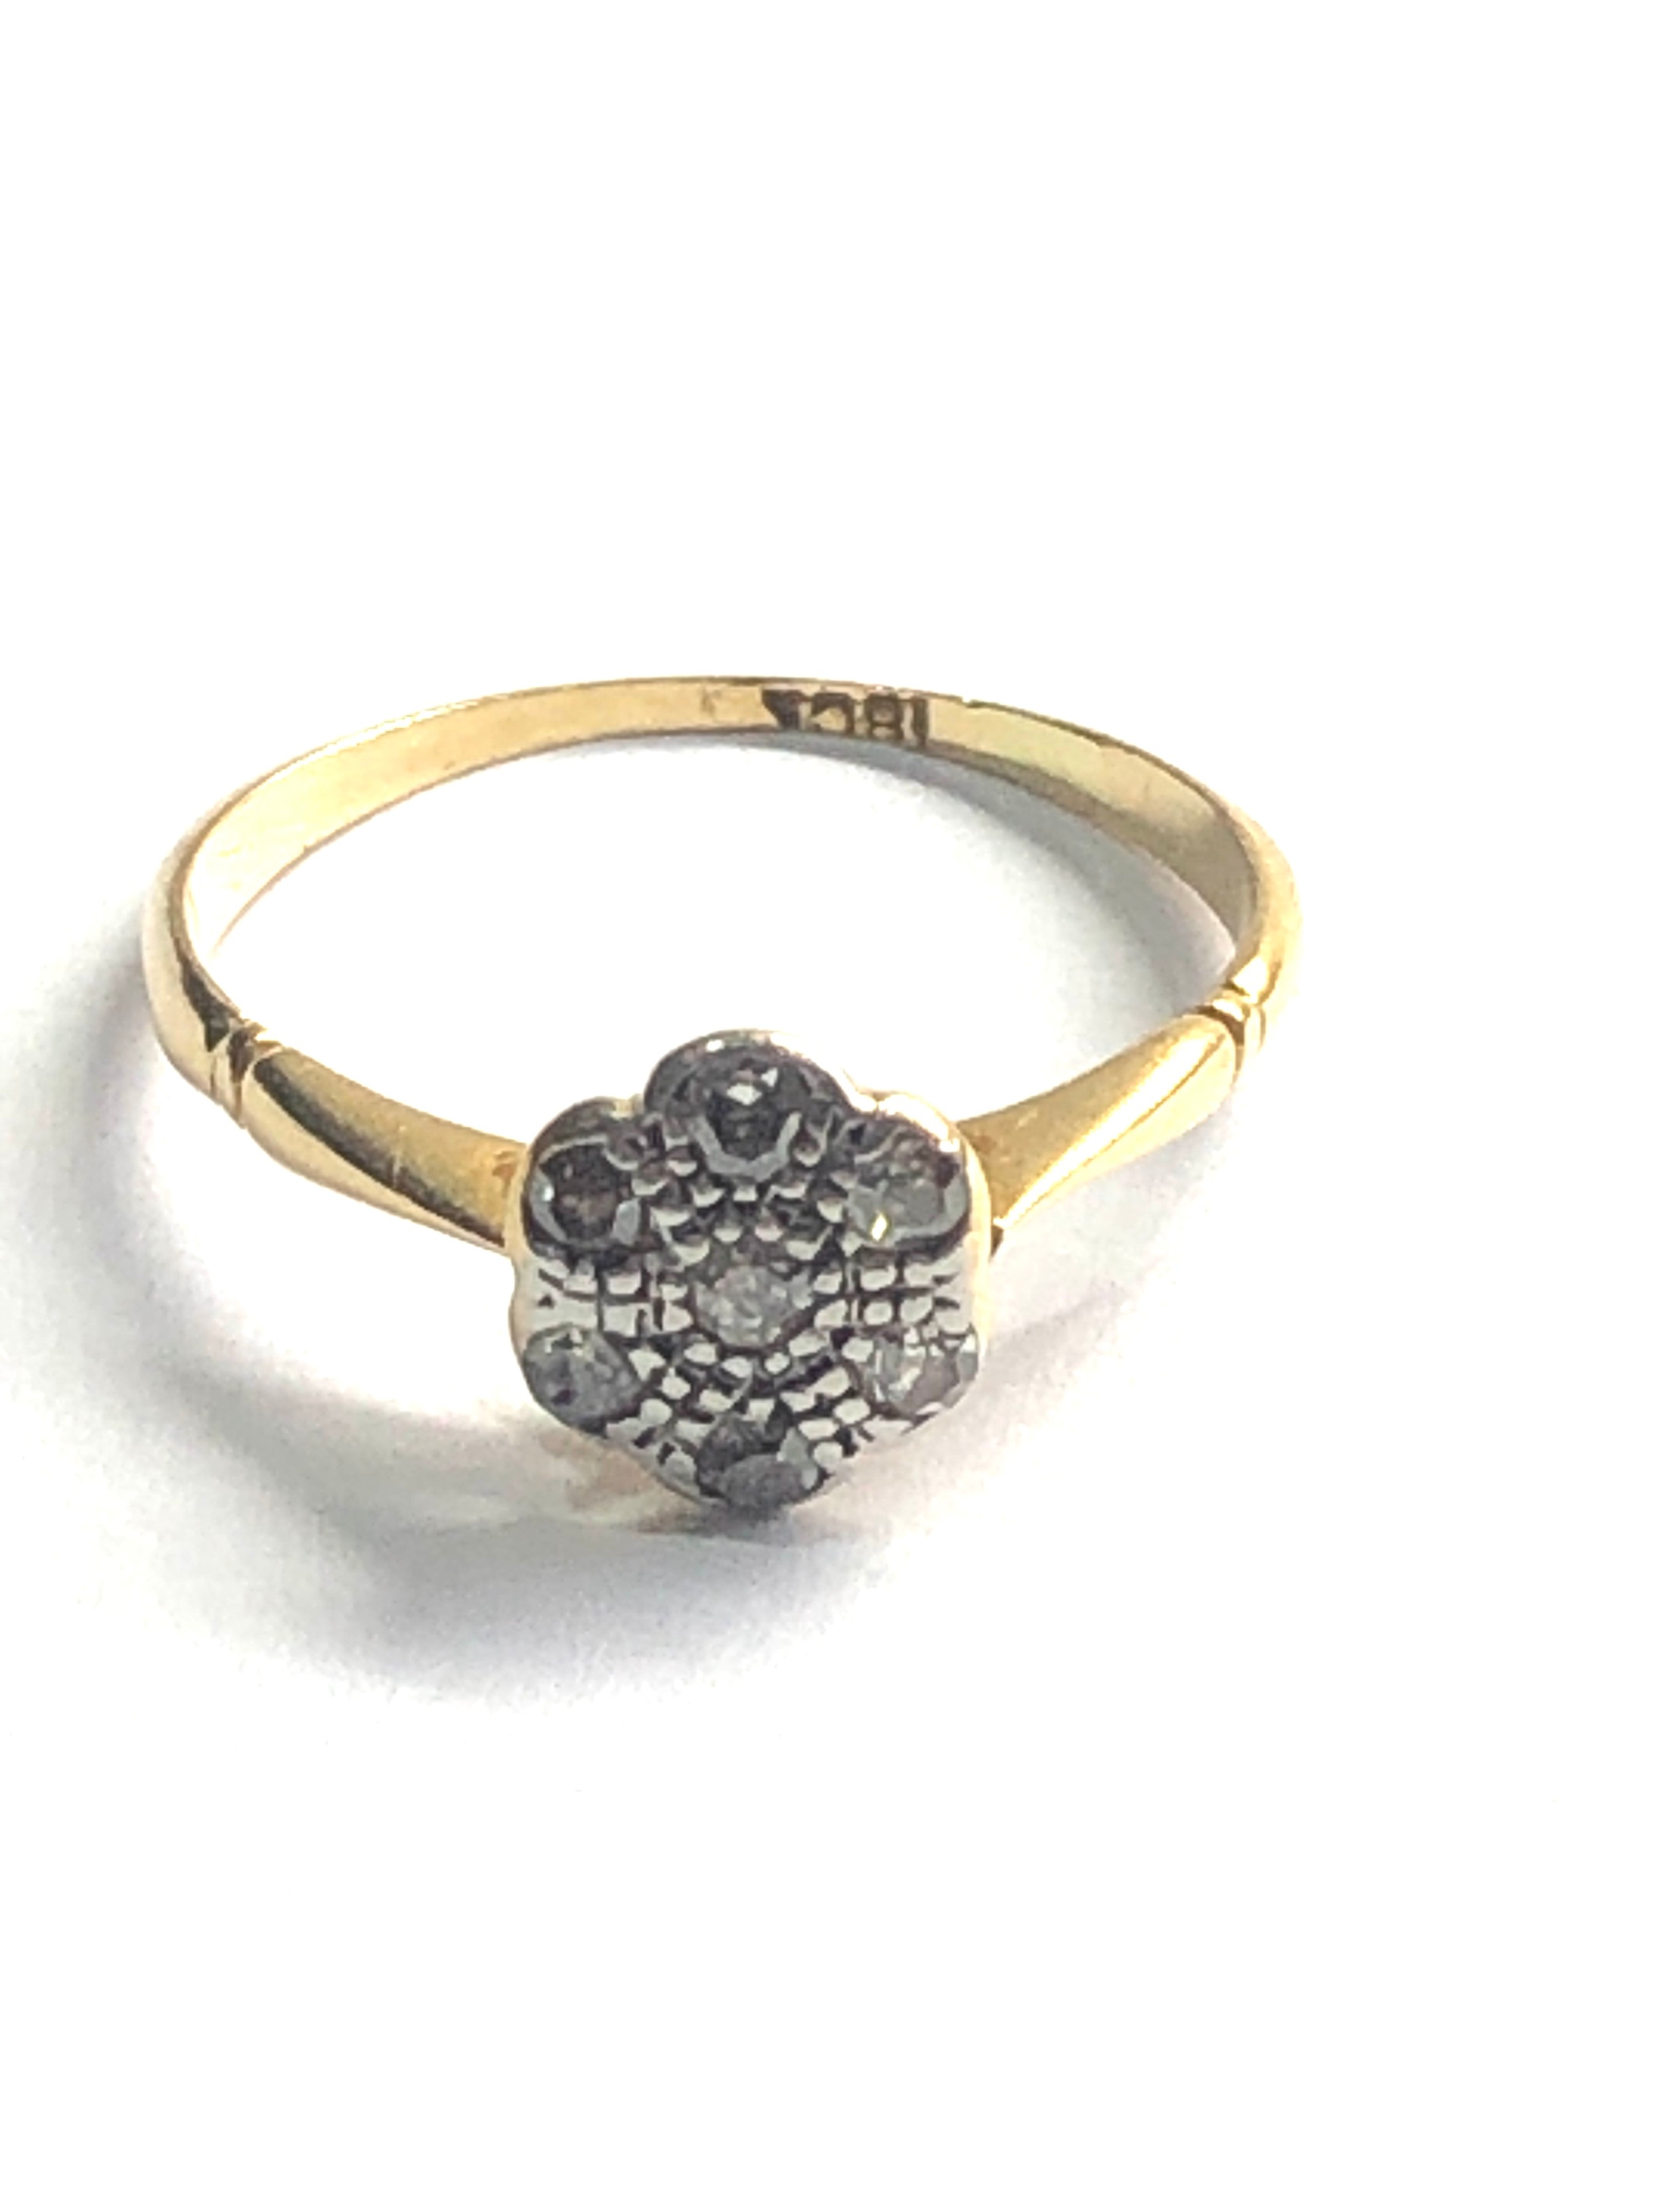 Antique 18ct gold diamond ring 1.5g